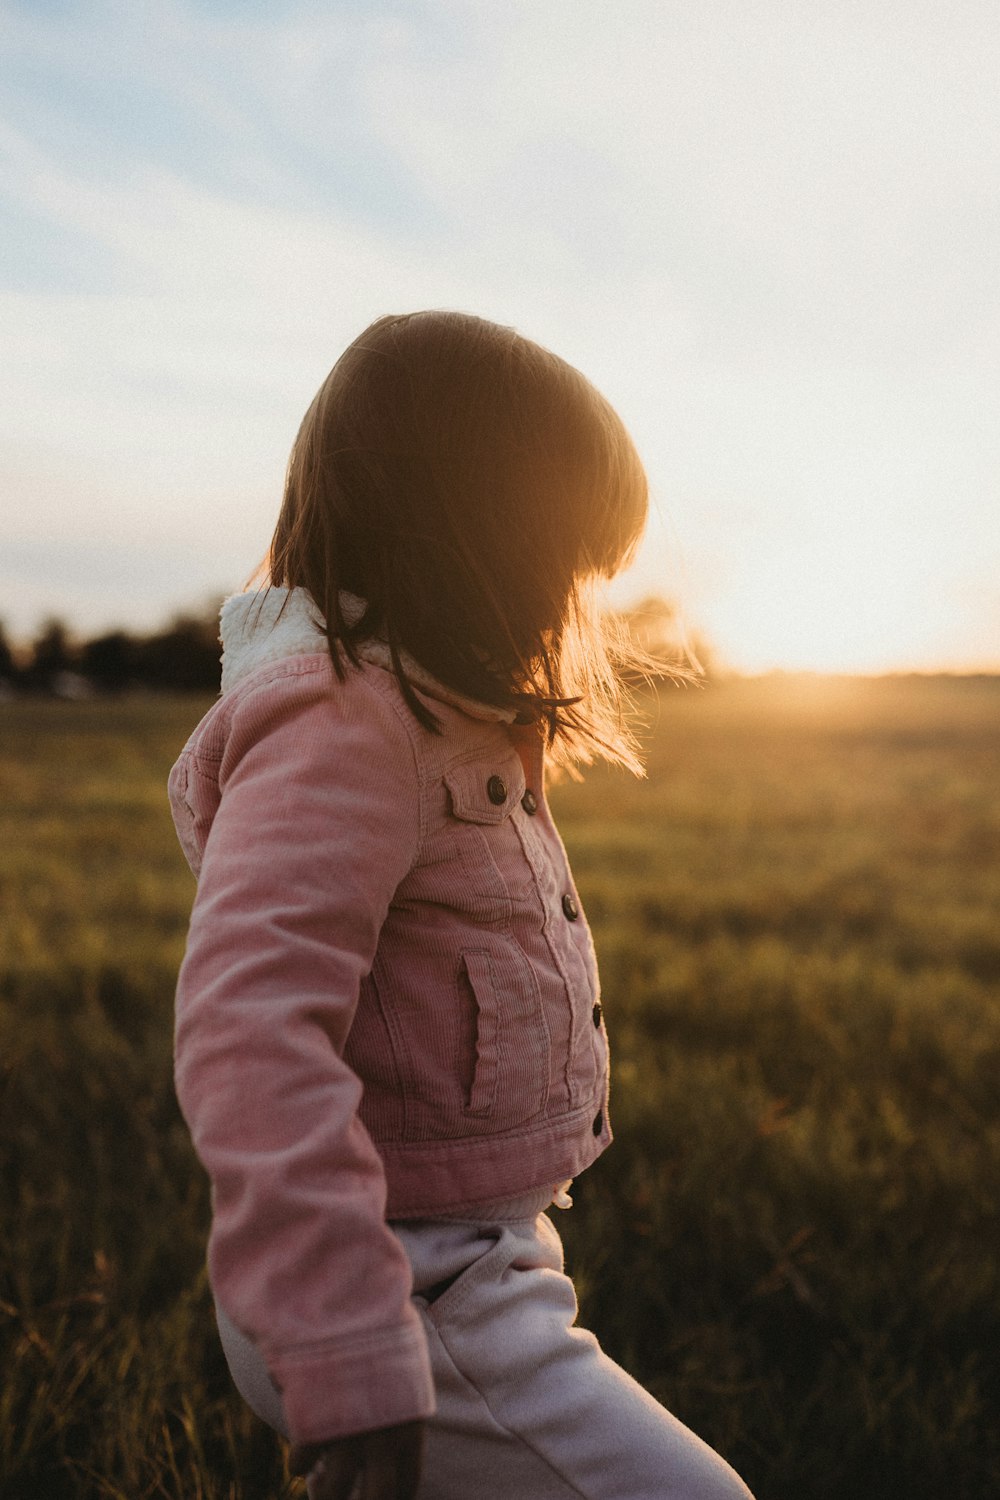 a little girl standing in a field of grass